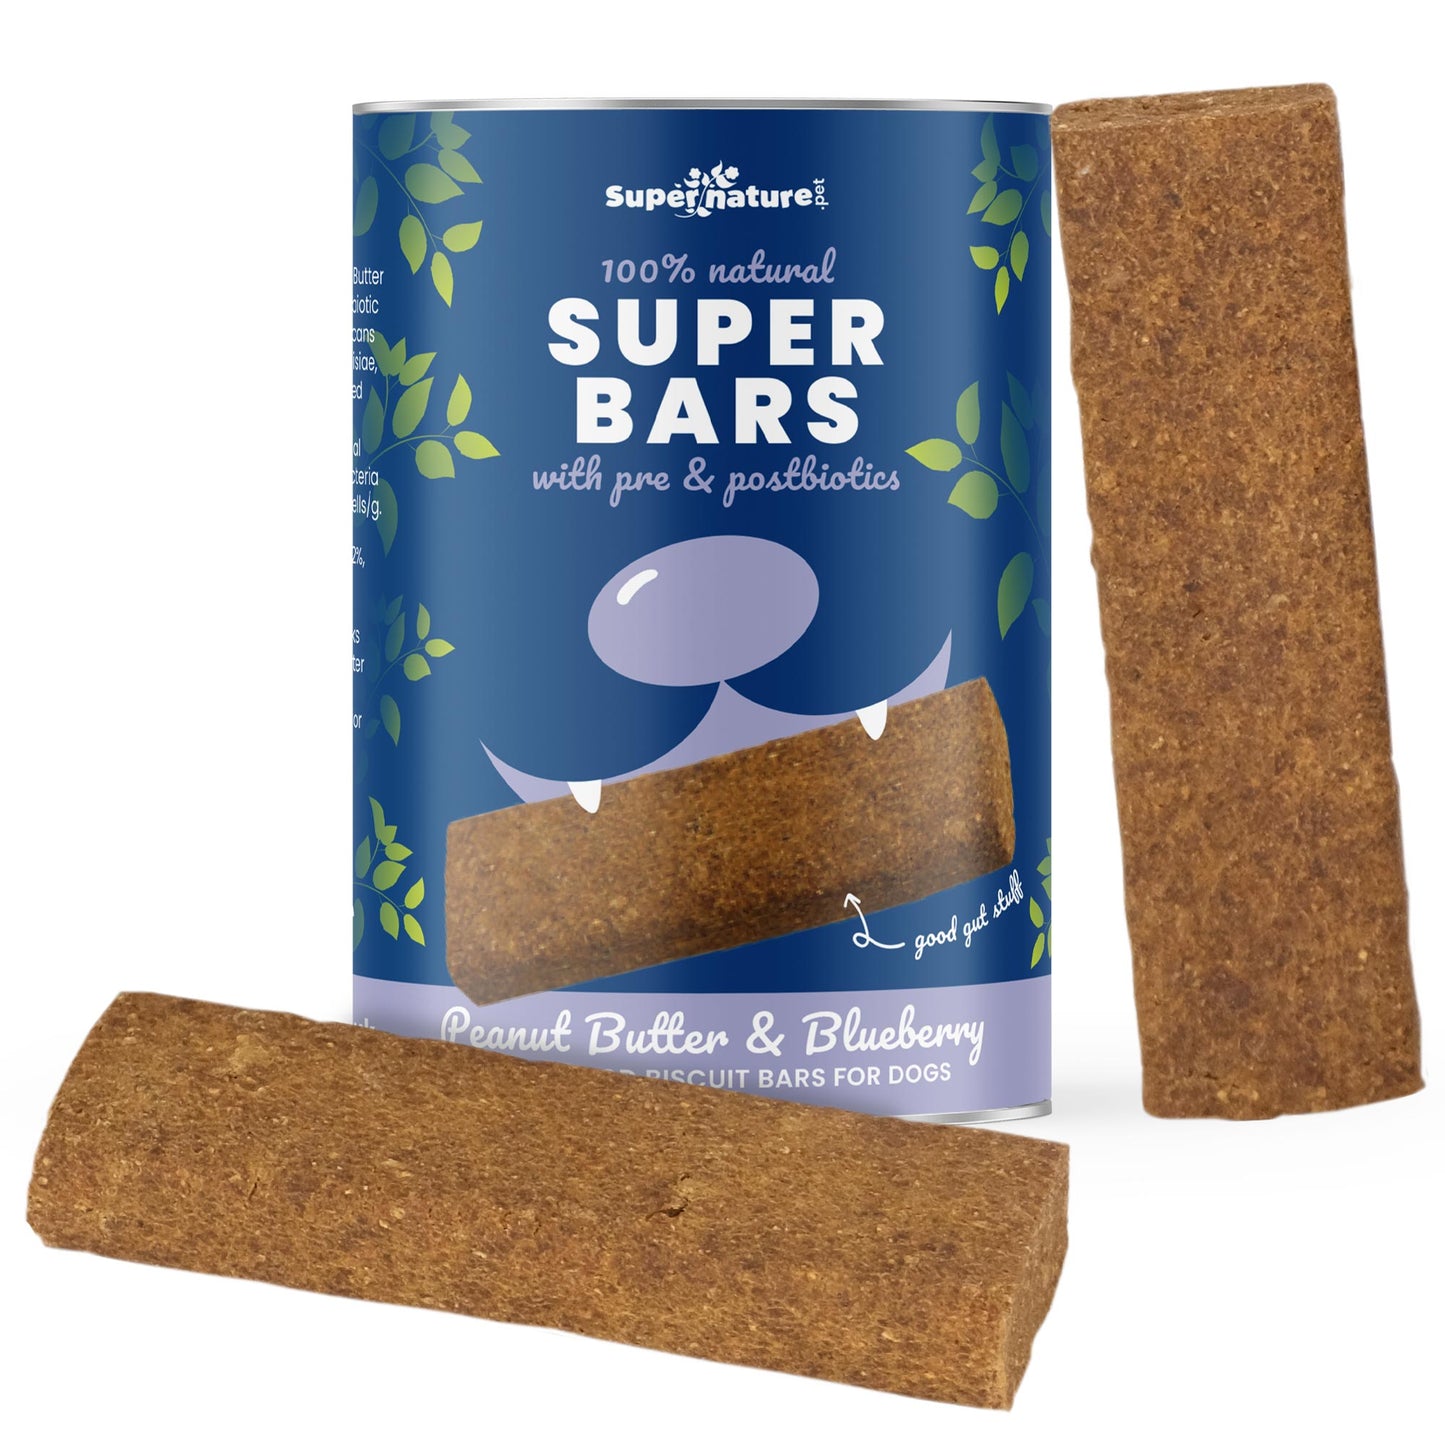 Super Bars - Peanut Butter & Blueberry Baked Treat Bars for Dogs